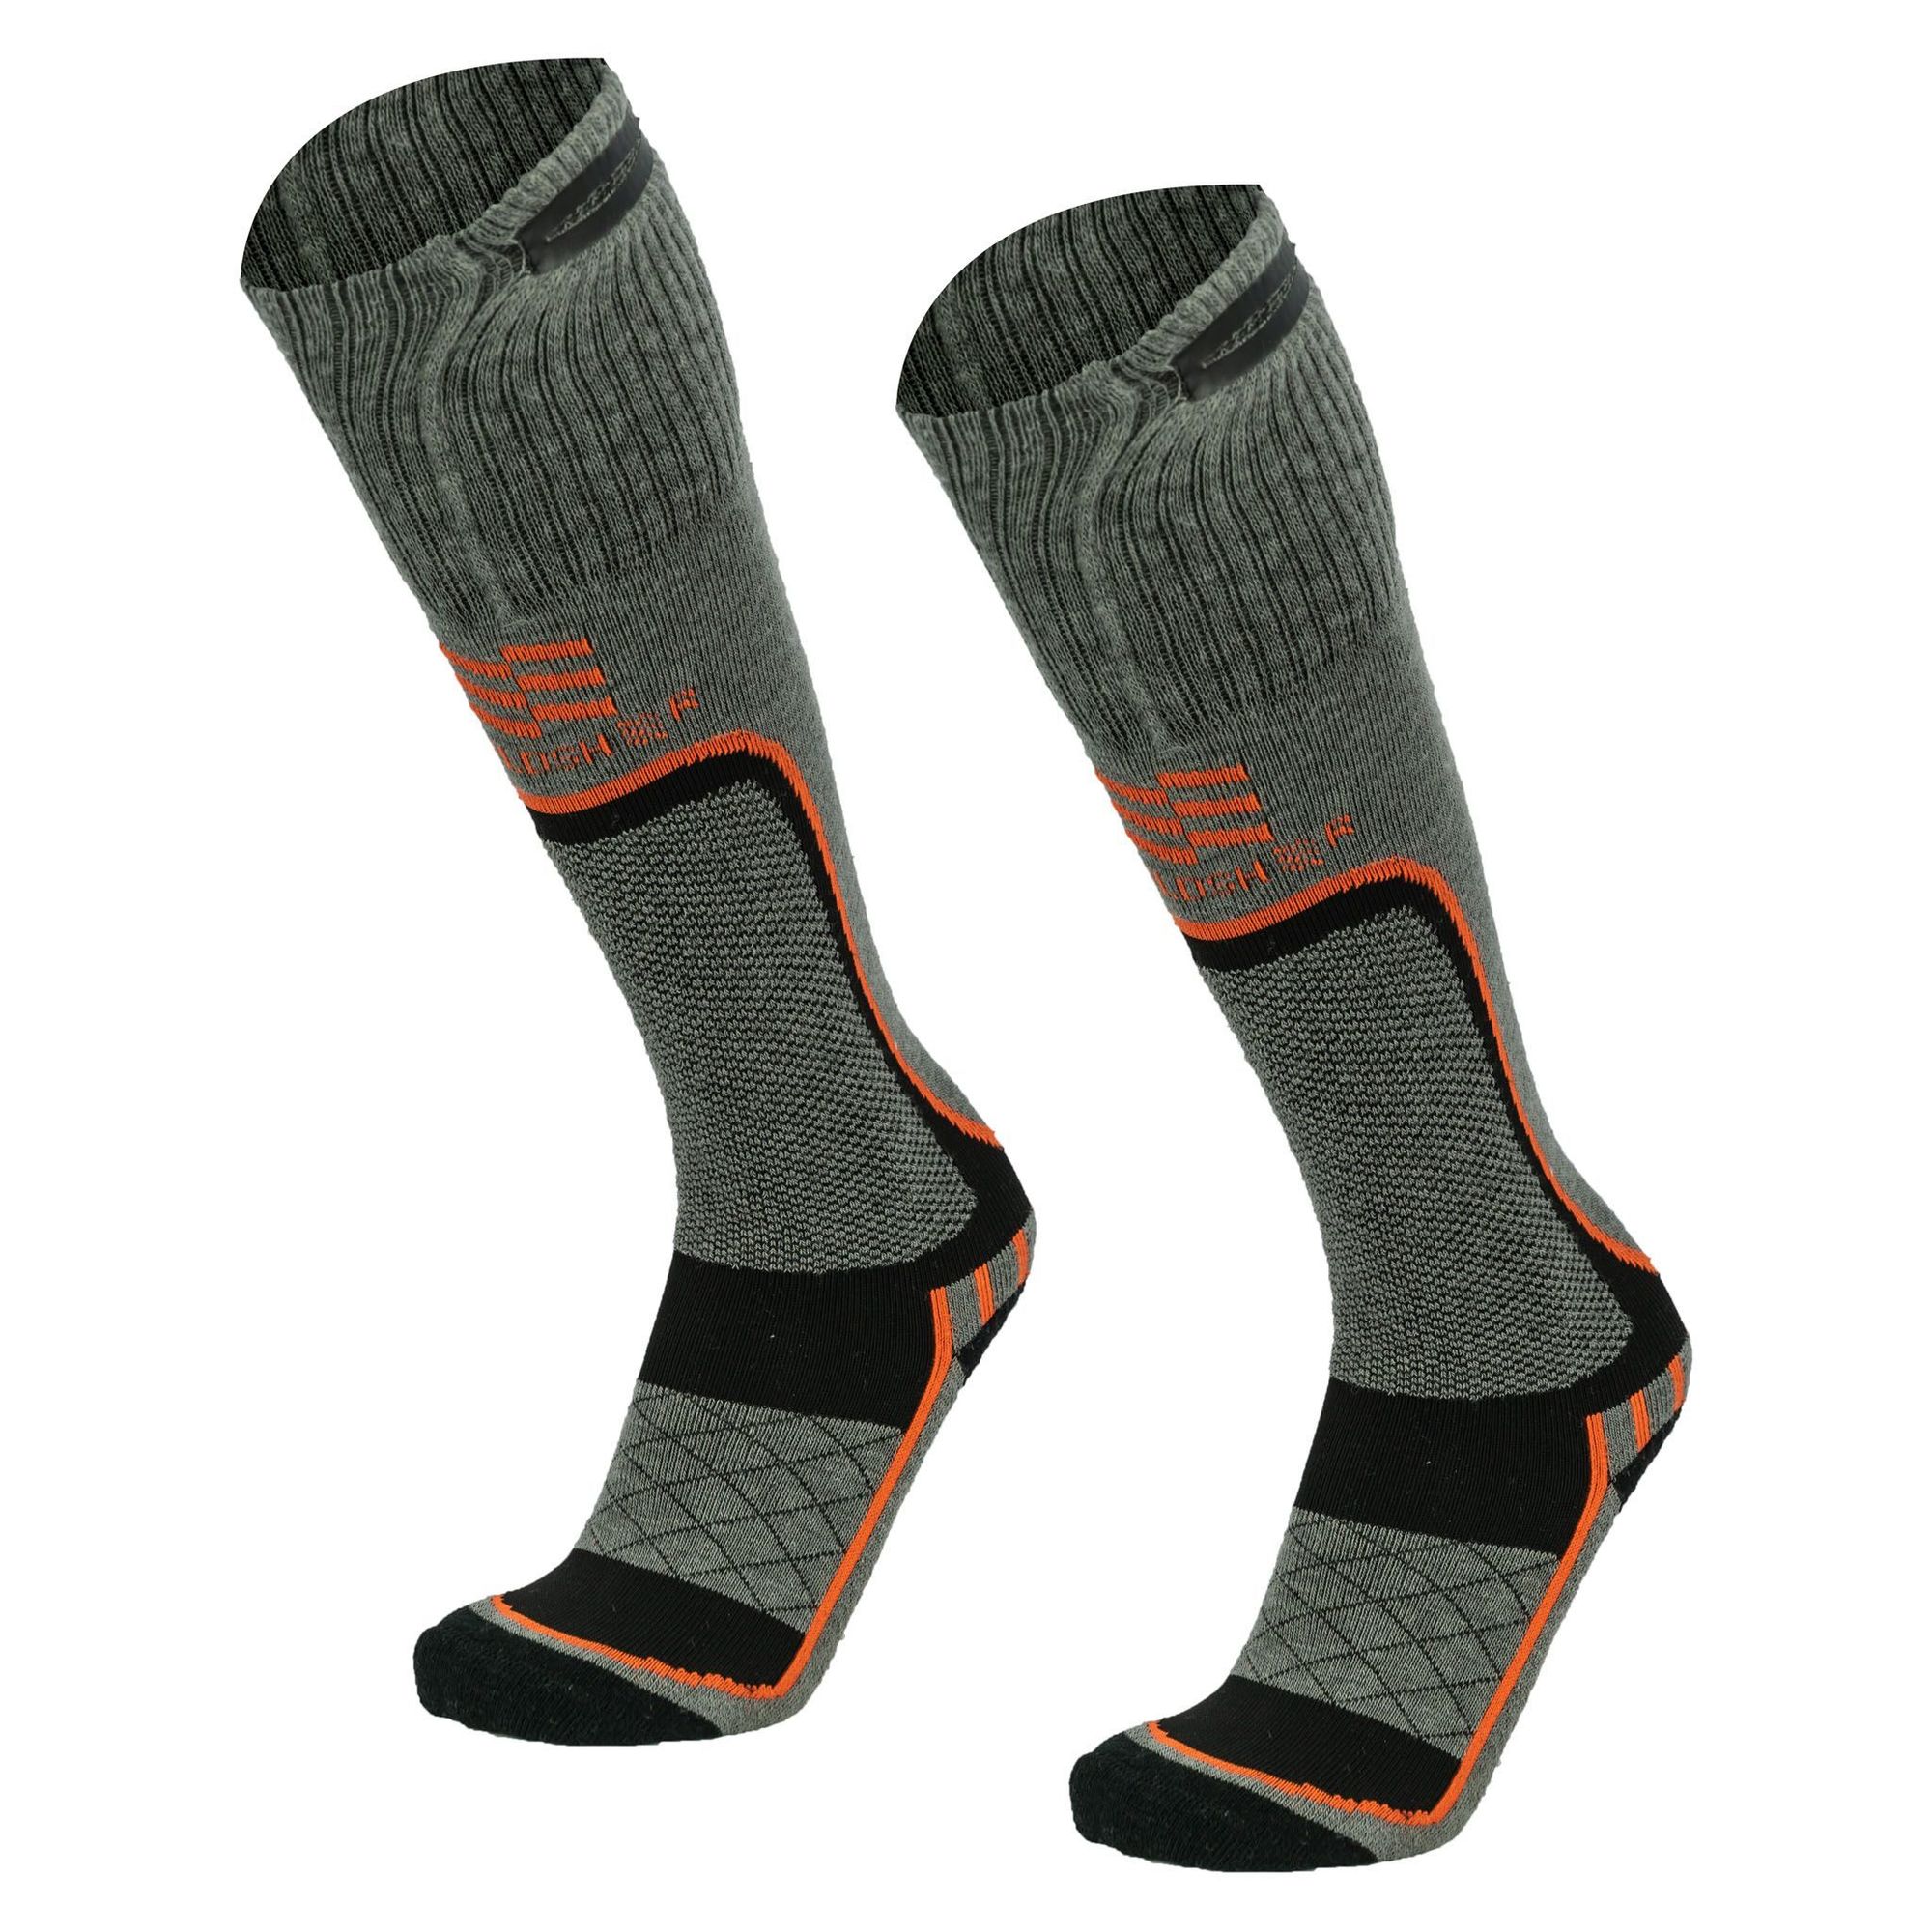 Fieldsheer, Premium Merino Heated Socks | Men's | BLK | LG, Size L, Pairs (qty.) 1 Color Black, Model MWMS07010421